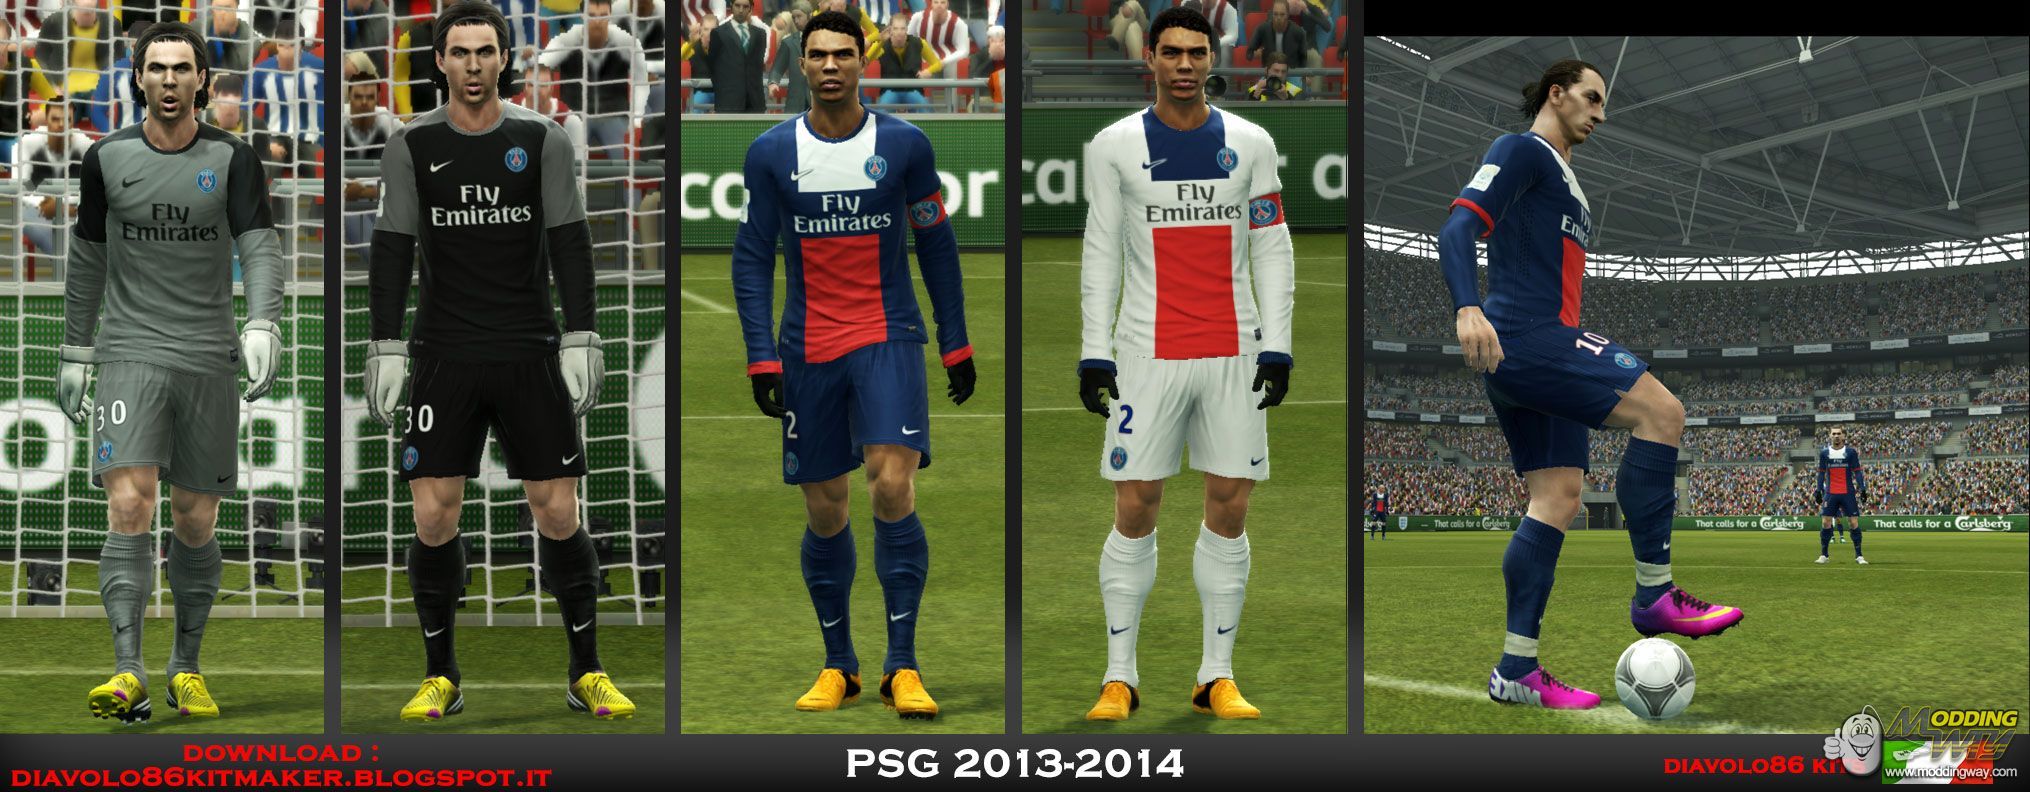 PSG Techfit GDB Folder - Pro Evolution Soccer 2011